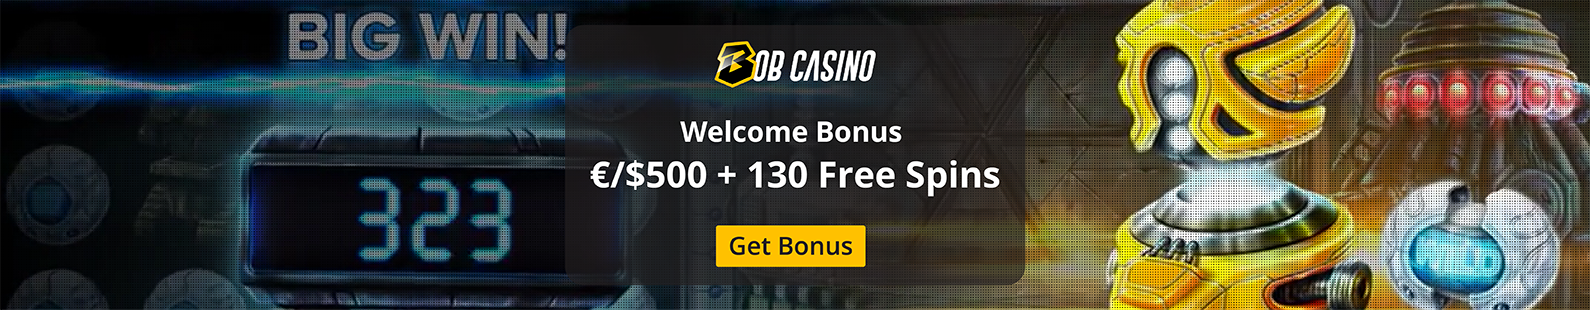 BobCasino: 100% Welcome Bonus up to €/$500 plus 130 Free Spins